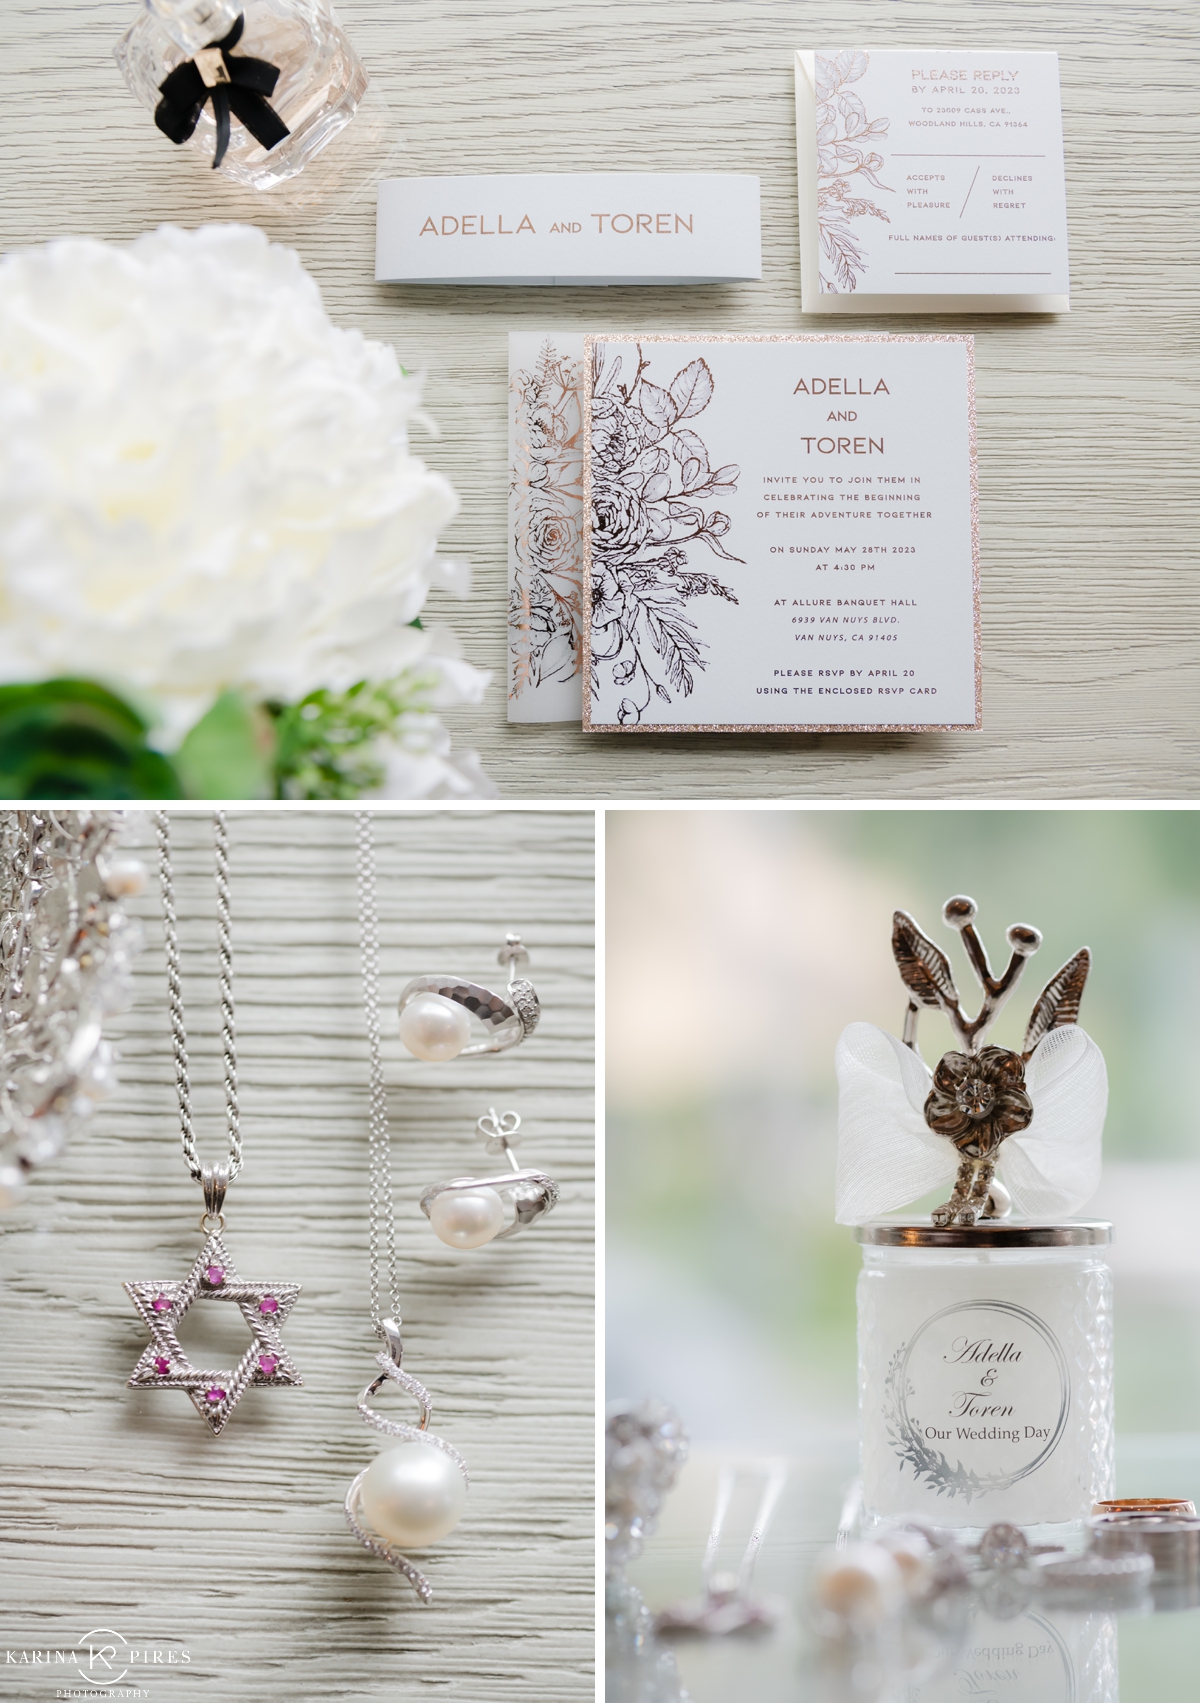 Classic white and silver wedding invitations